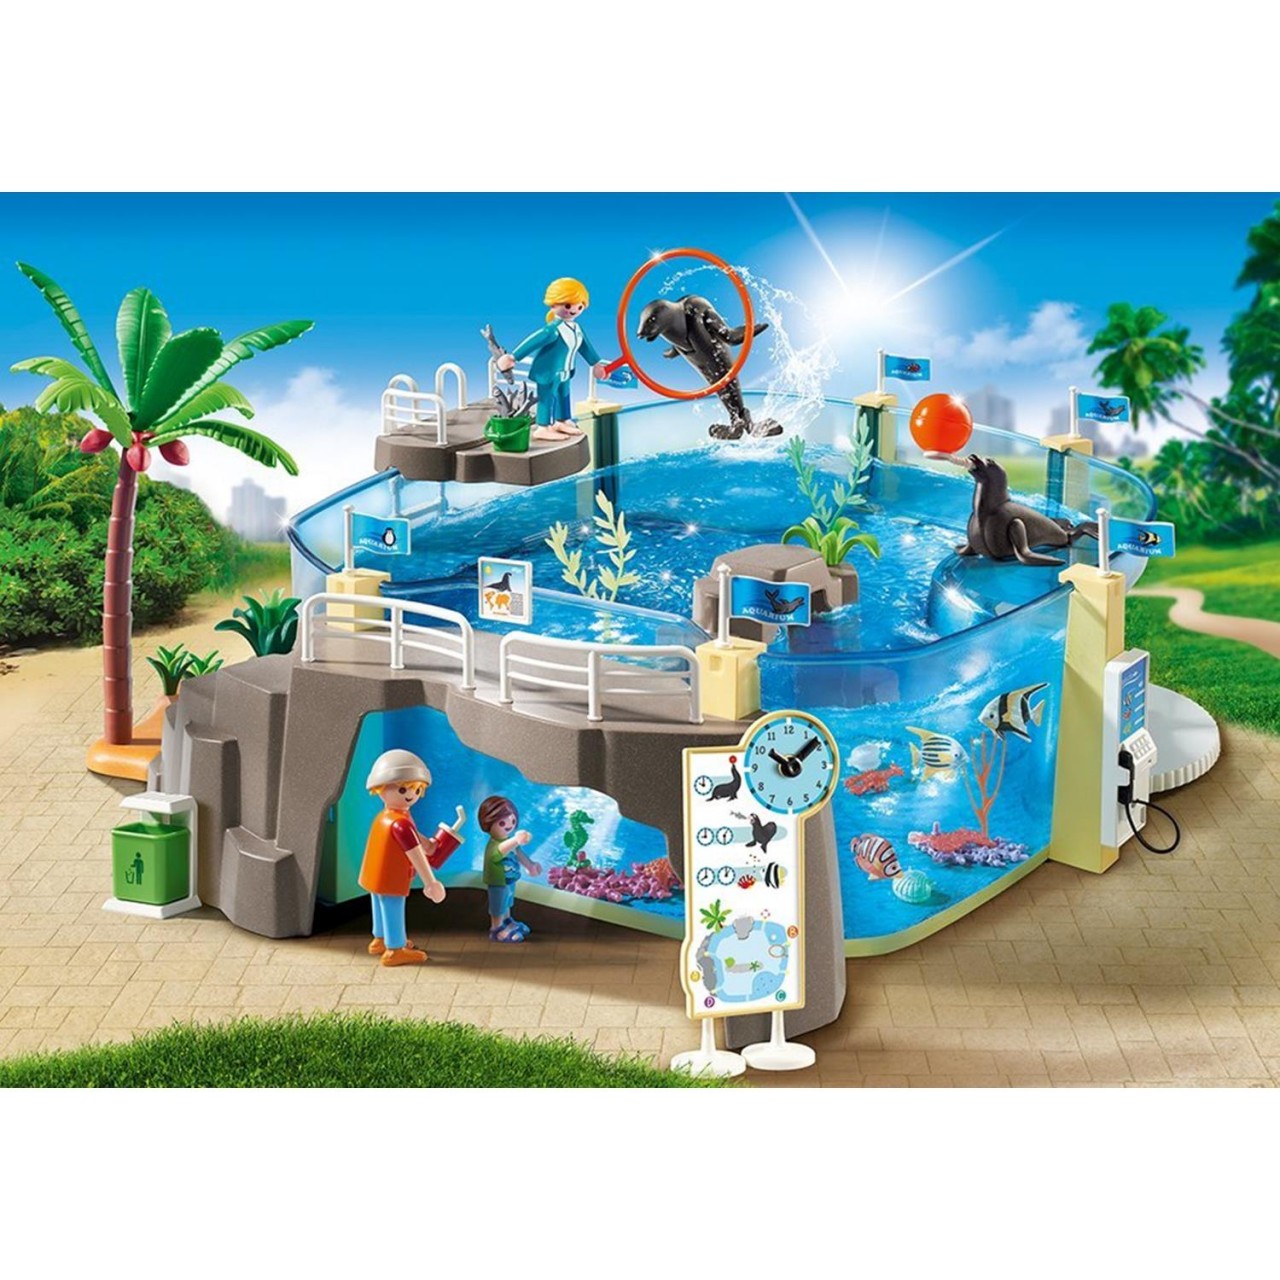 Playmobil 9060 Meeresaquarium